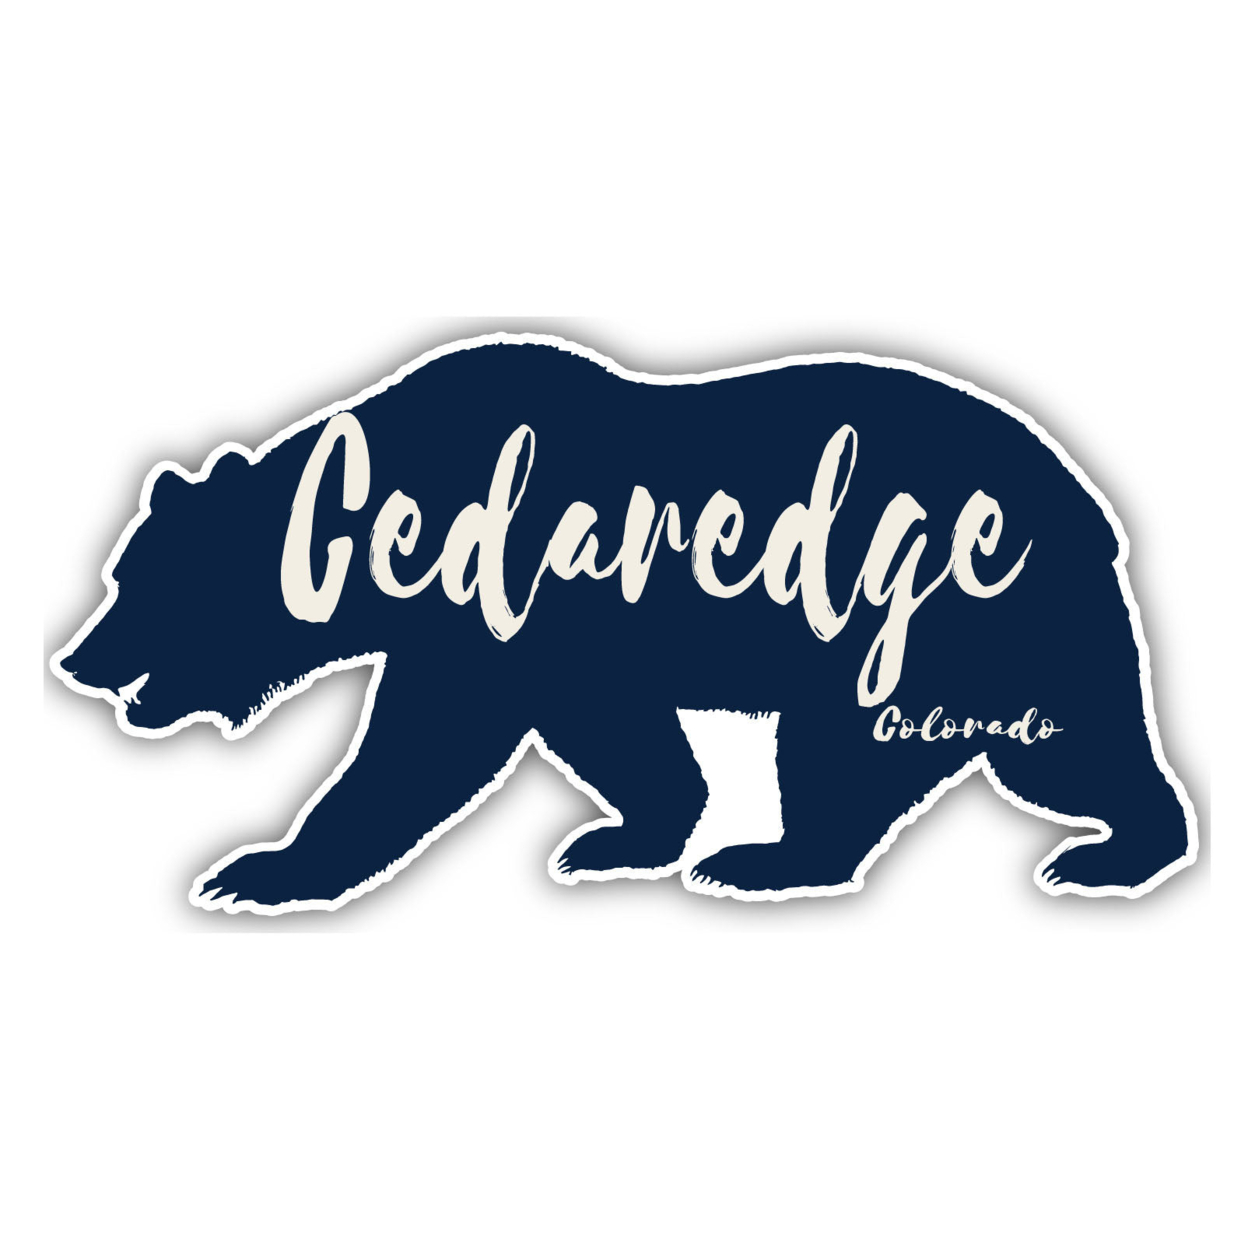 Cedaredge Colorado Souvenir Decorative Stickers (Choose Theme And Size) - Single Unit, 12-Inch, Bear